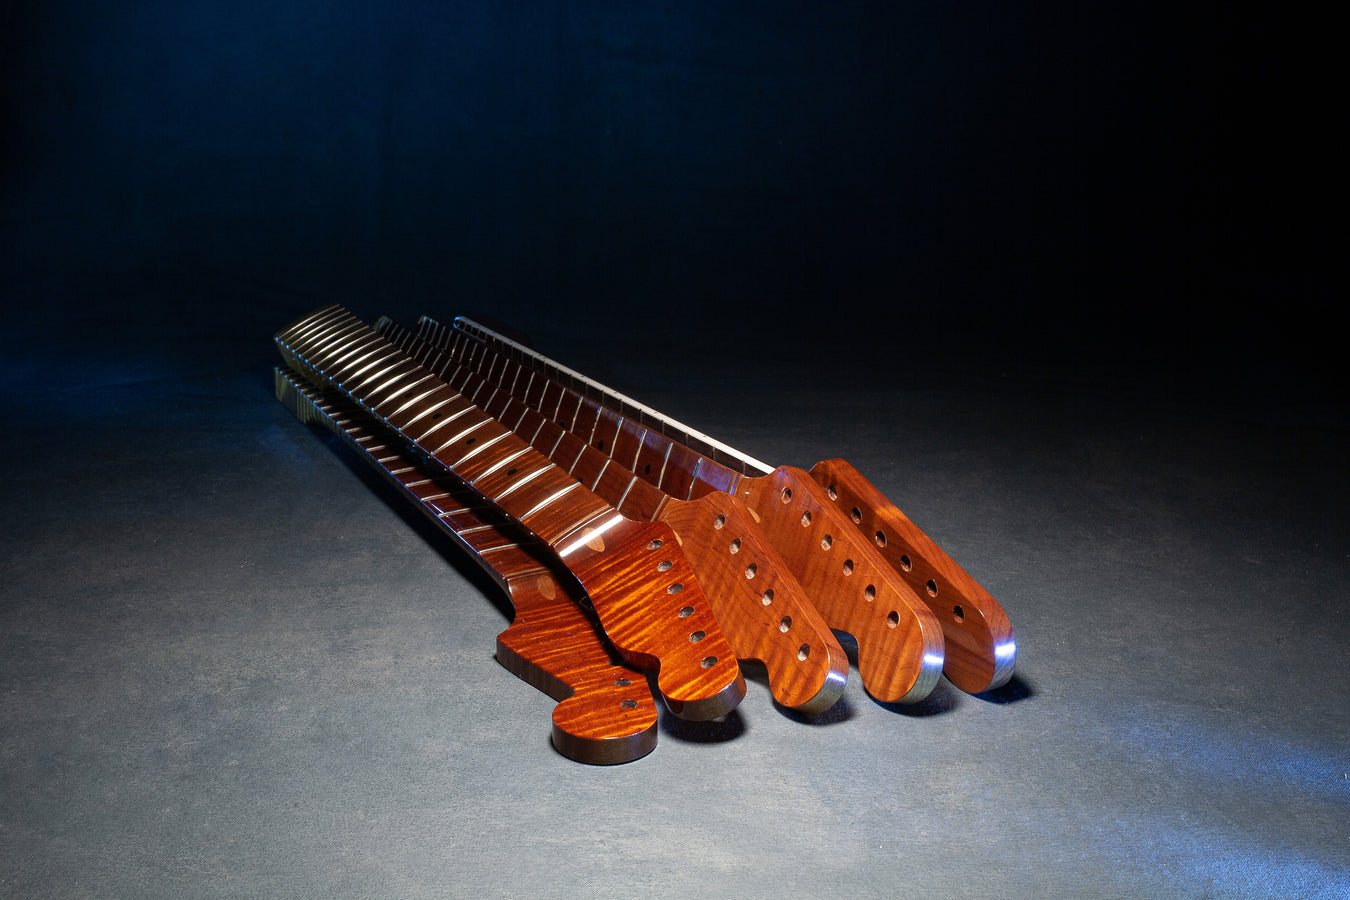 stack of premium guitar necks with shiny coating